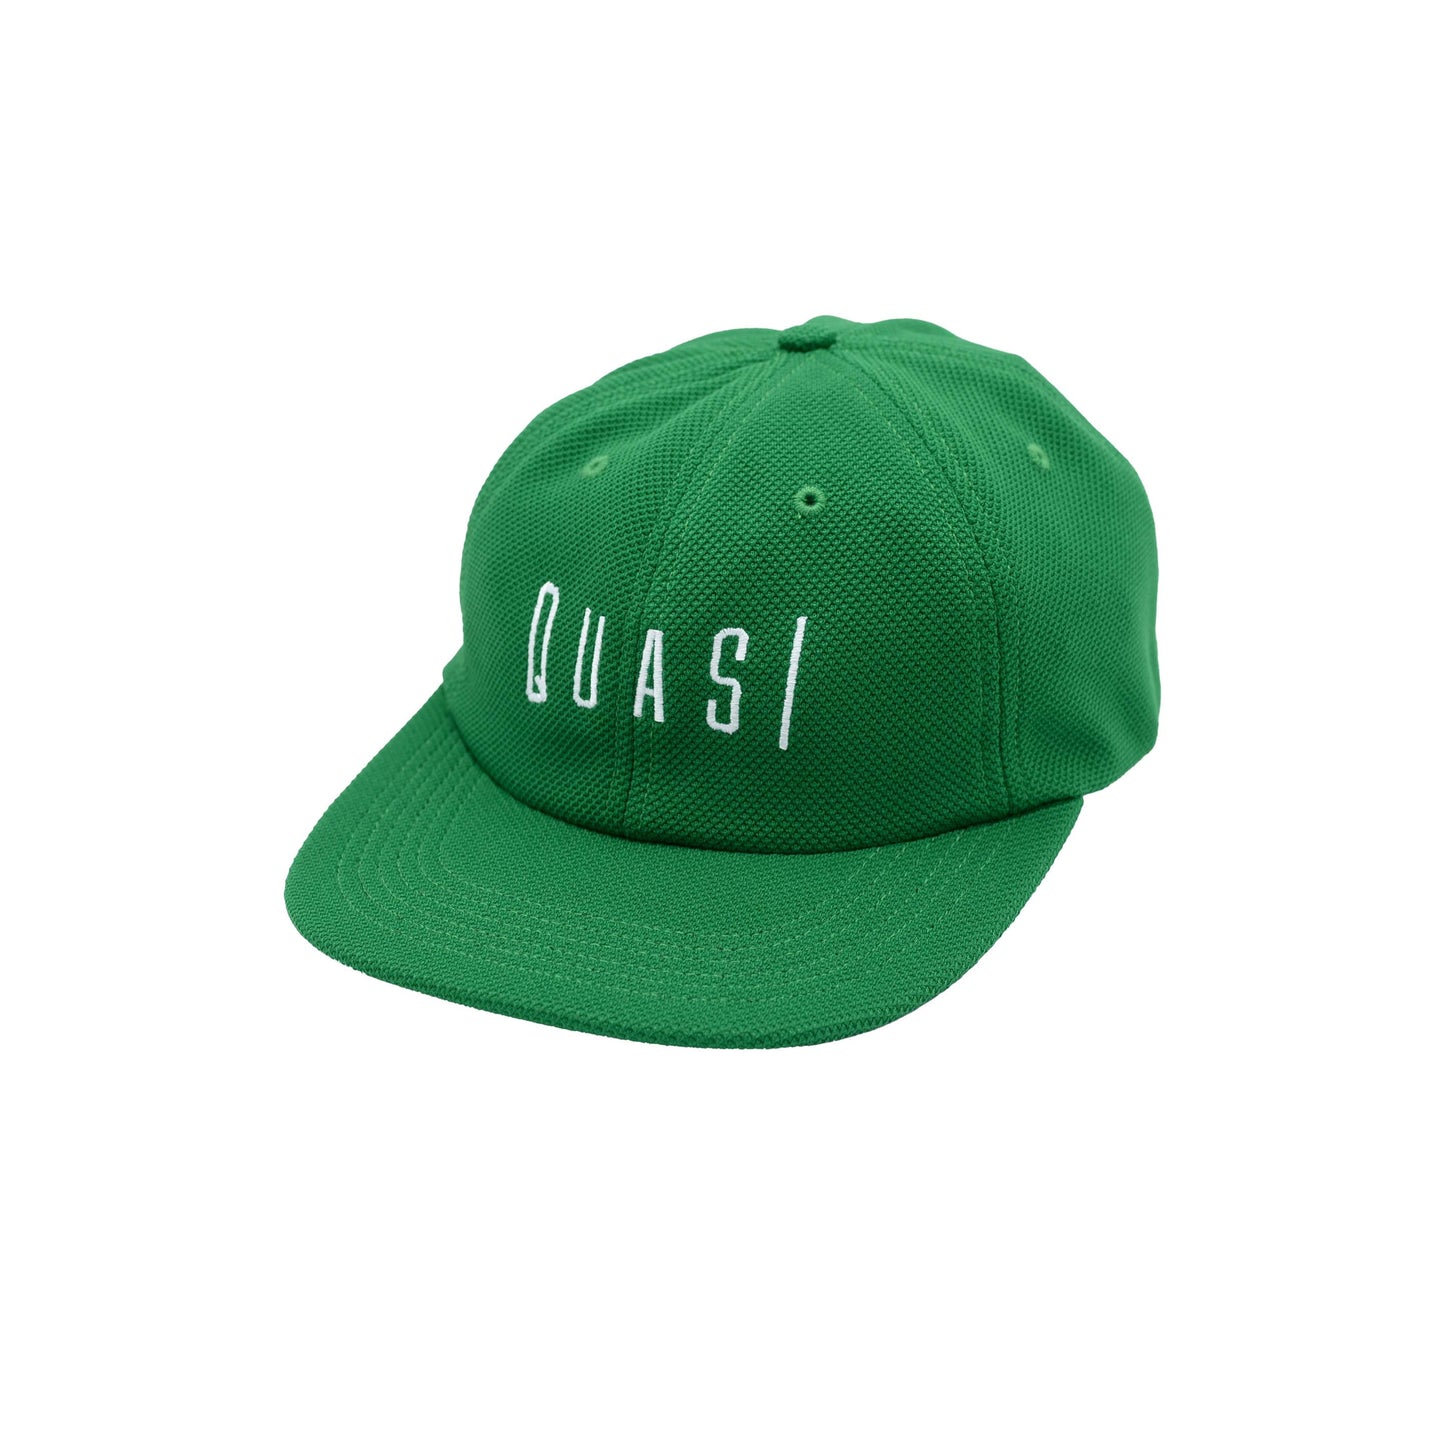 QUASI - PE 6-PANEL ADJUSTABLE CAP - KELLY GREEN